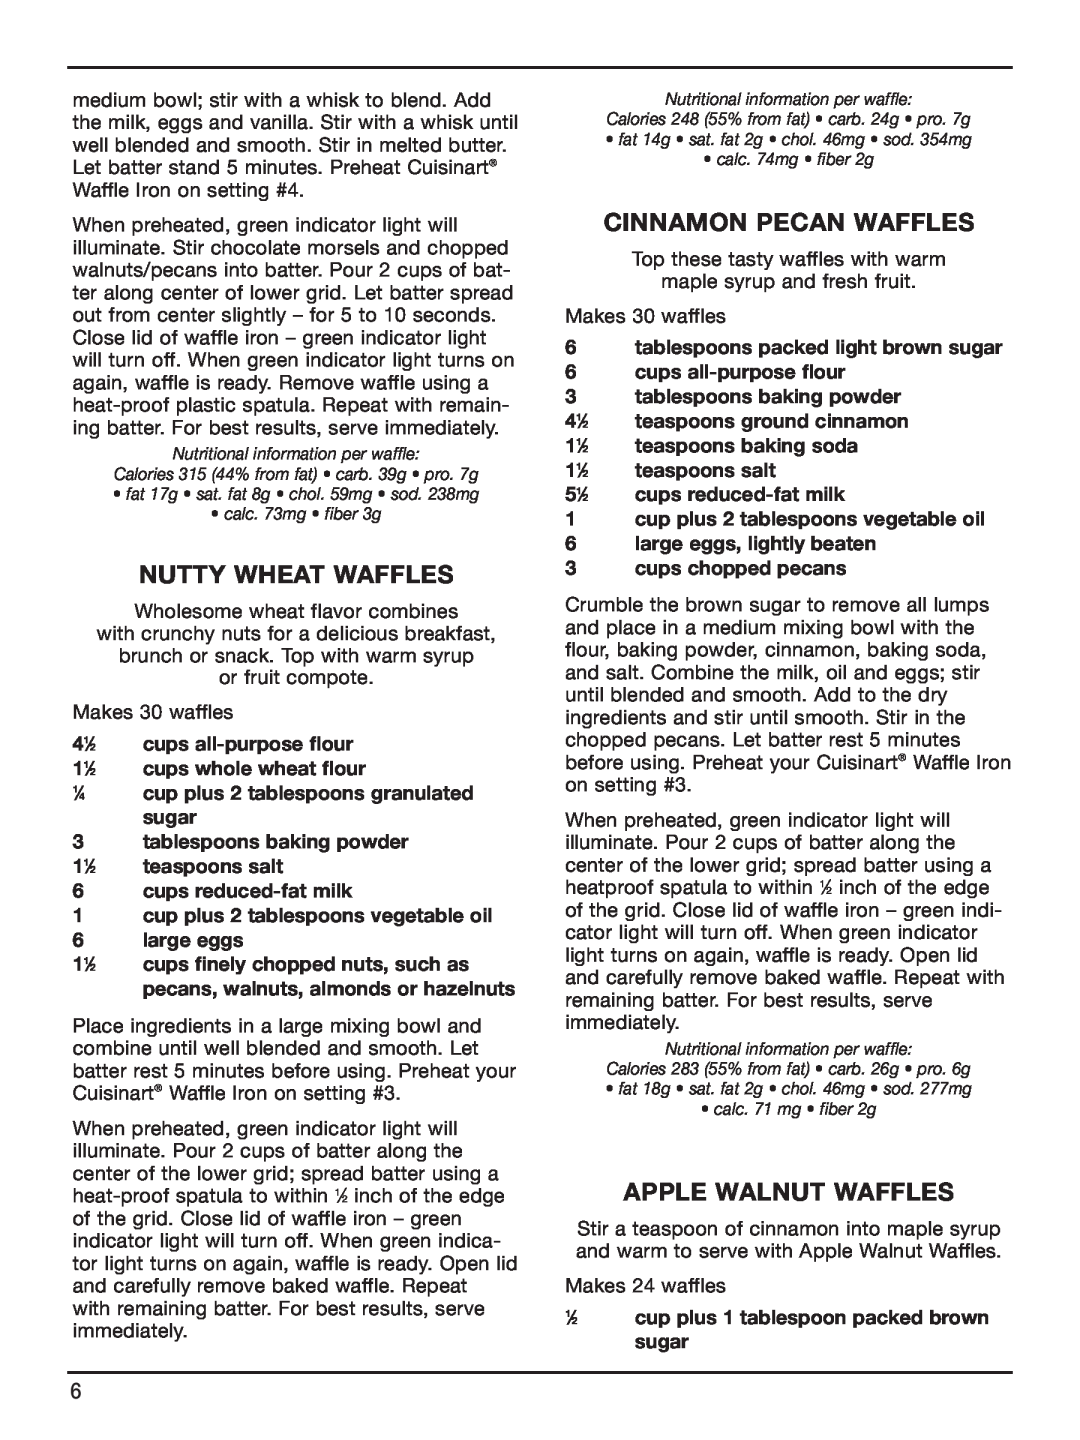 Cuisinart WAF-6 manual Nutty Wheat Waffles, Cinnamon Pecan Waffles, Apple Walnut Waffles 